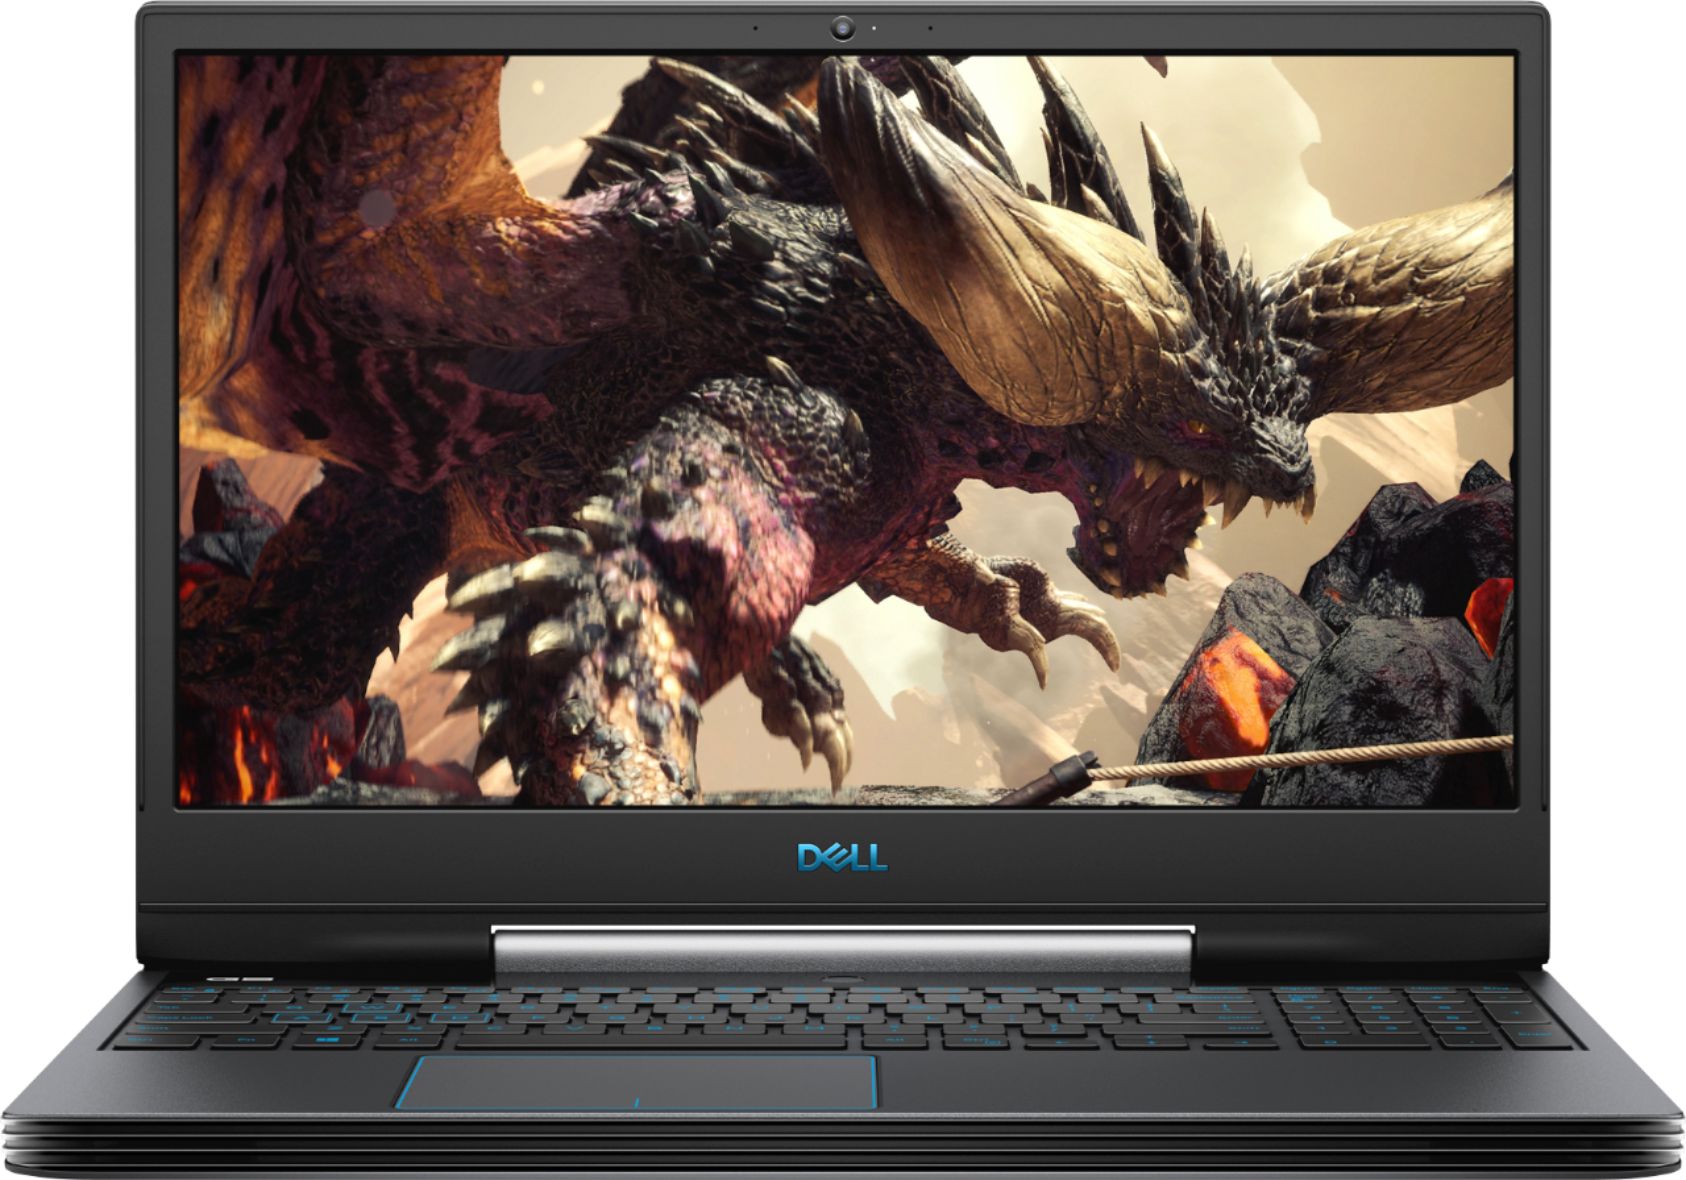 Dell - G5 15.6 inch Gaming Laptop - Intel Core i7 - 16GB Memory - NVIDIA GeForce GTX 1660 Ti Max-Q - 1TB HDD + 256GB SSD - Deep Space Black - ,169.99